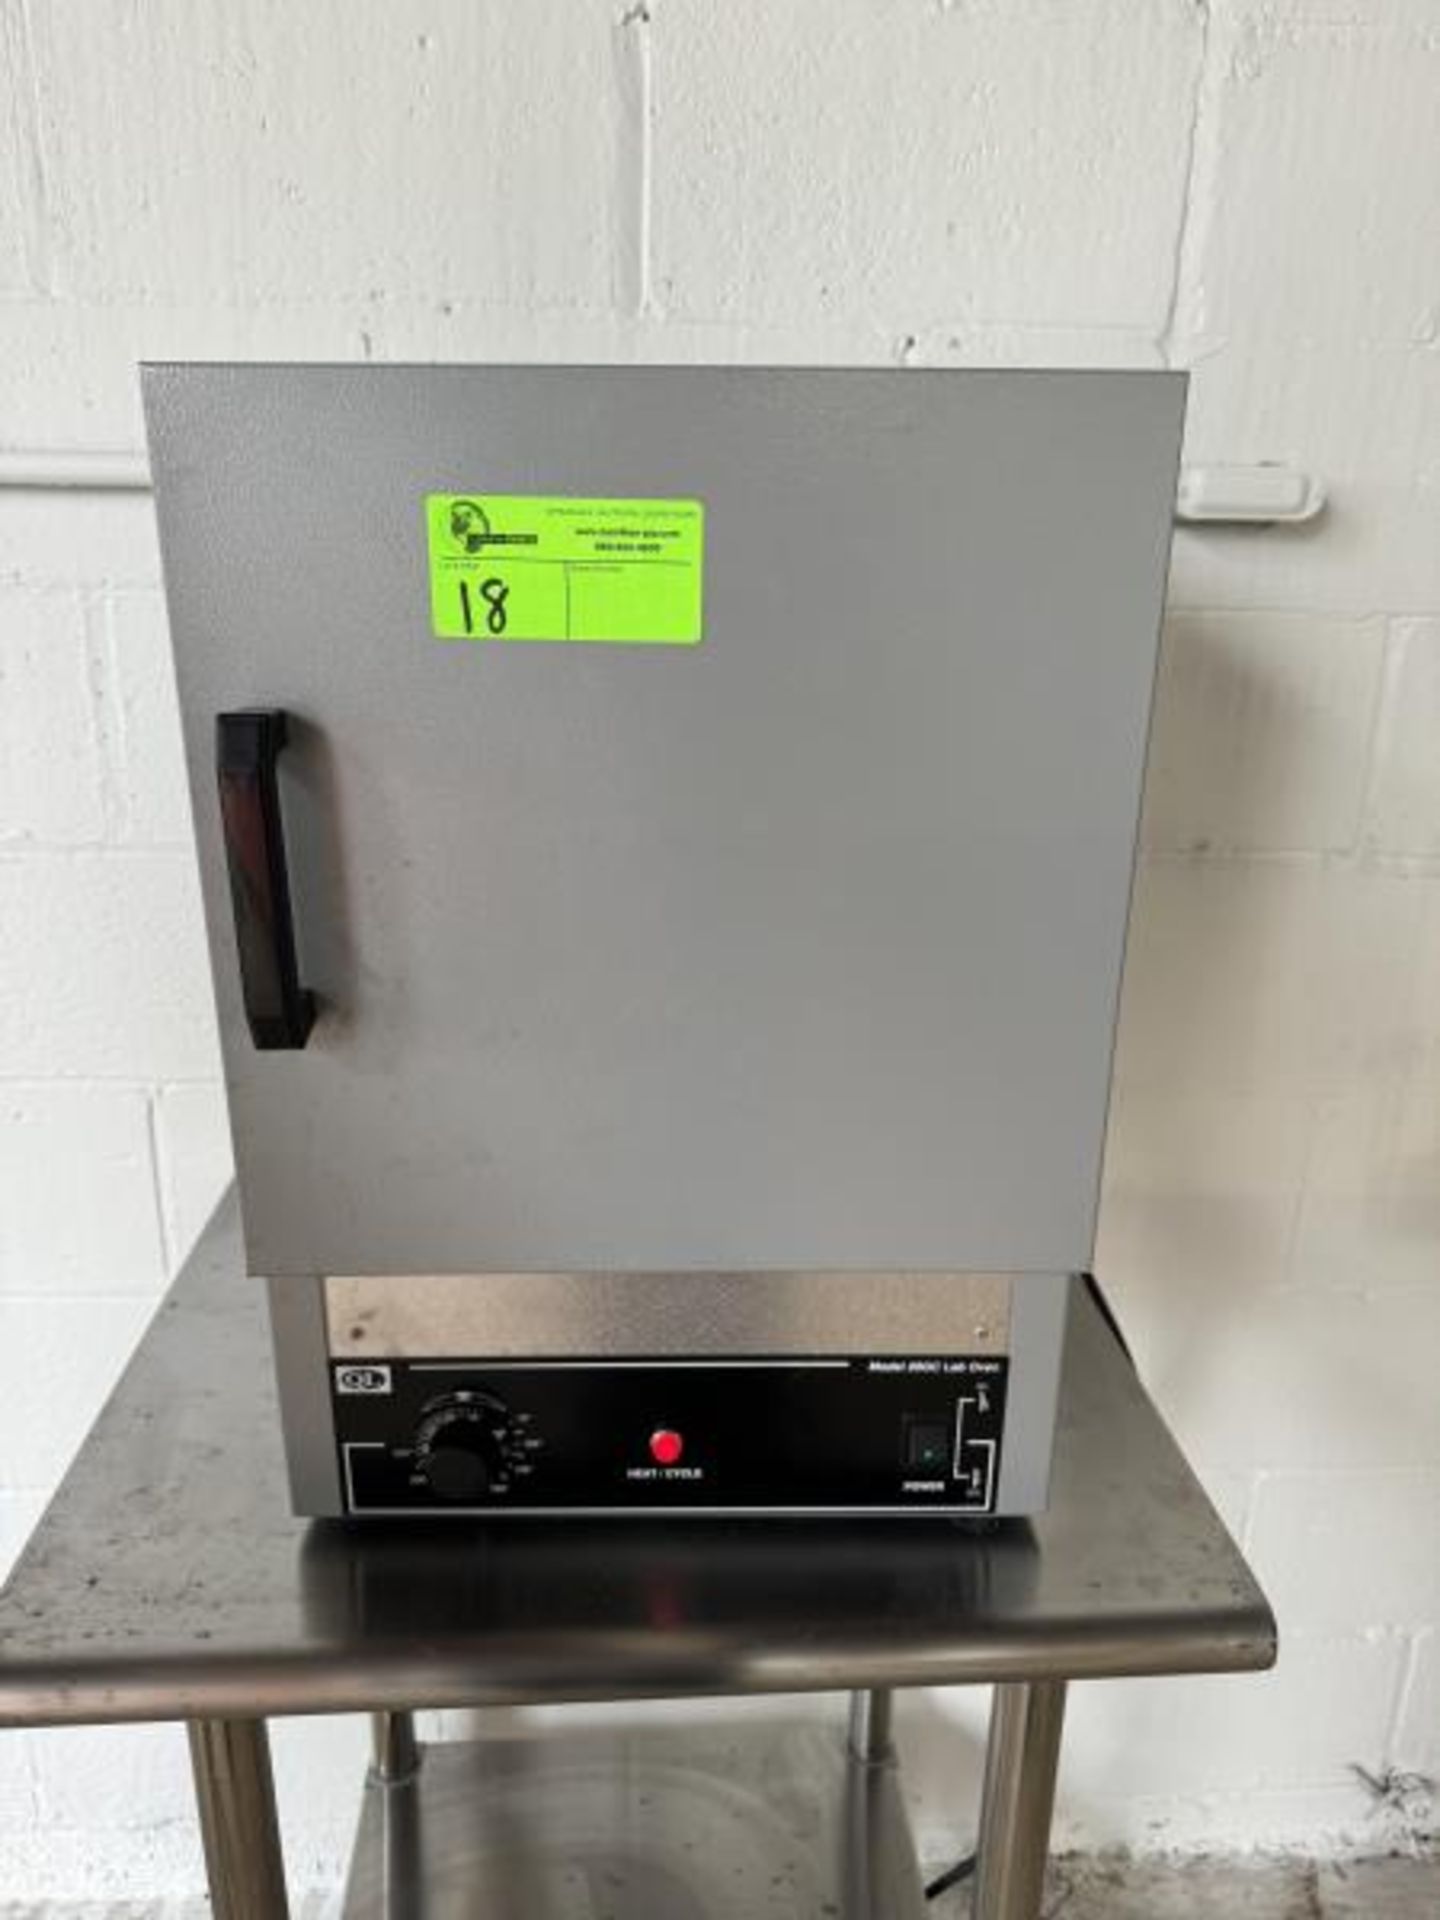 QL Lab Oven M: 20GC, SN: G2-6491